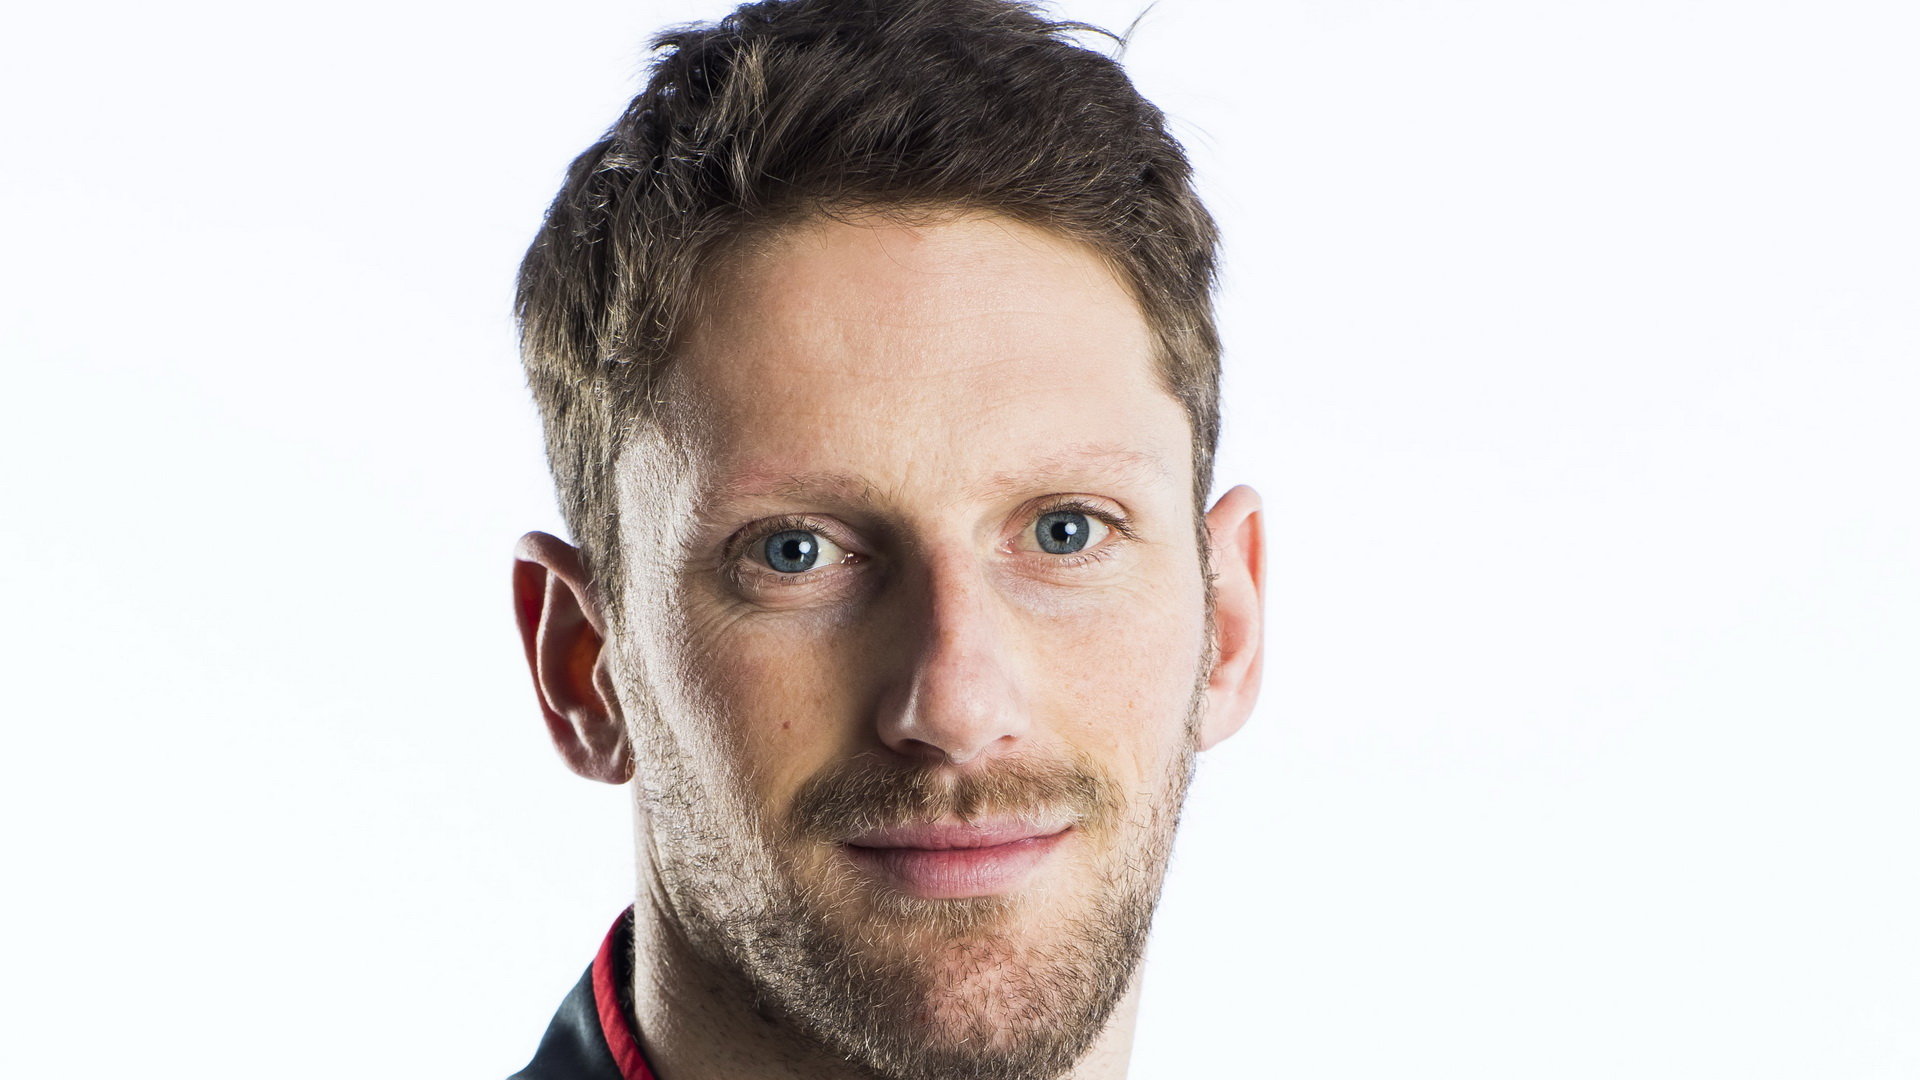 Romain Grosjean pro sezónu 2018